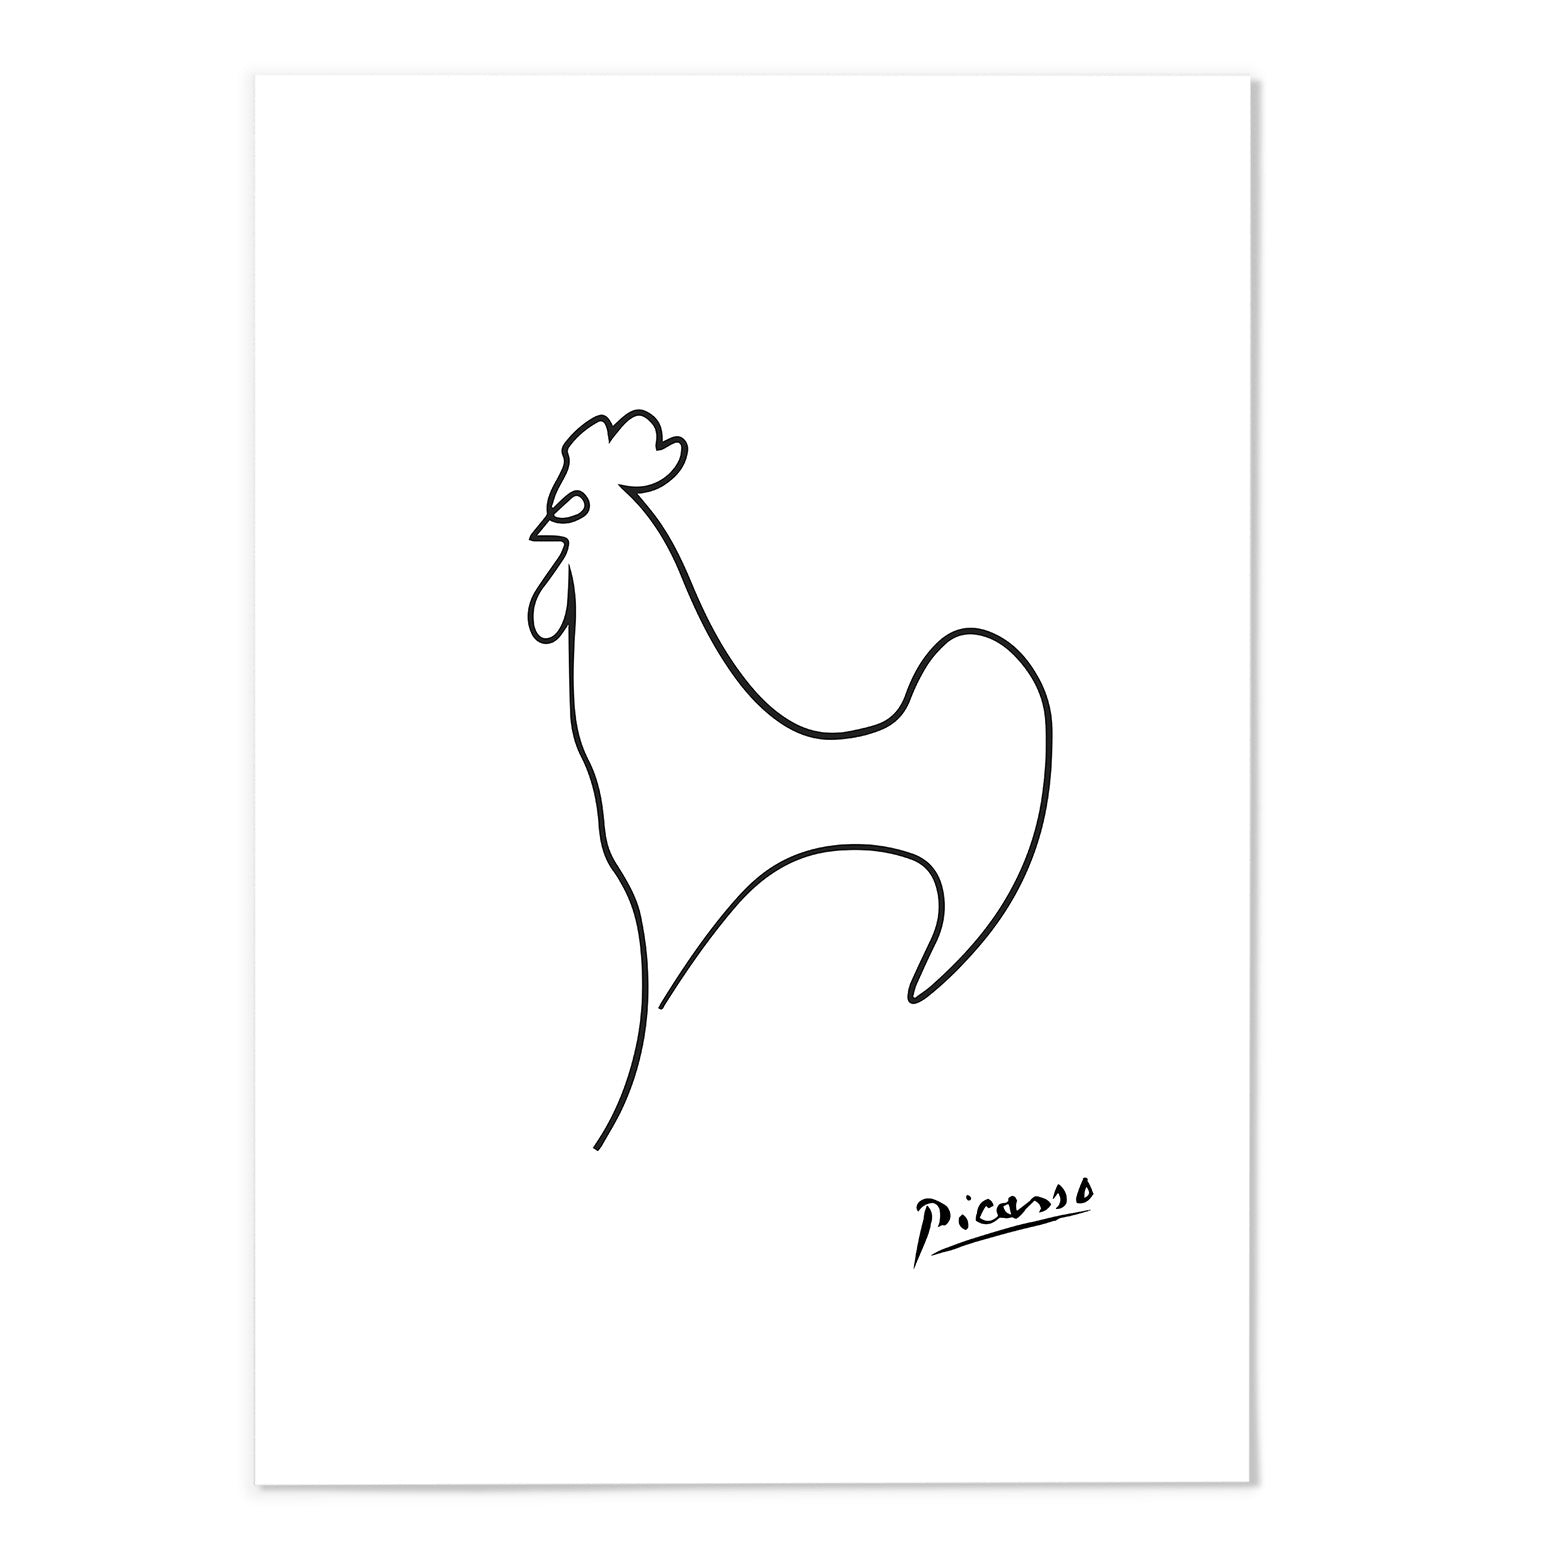 Picasso Cockster Line Sketch Art Print - MJ Design Studio